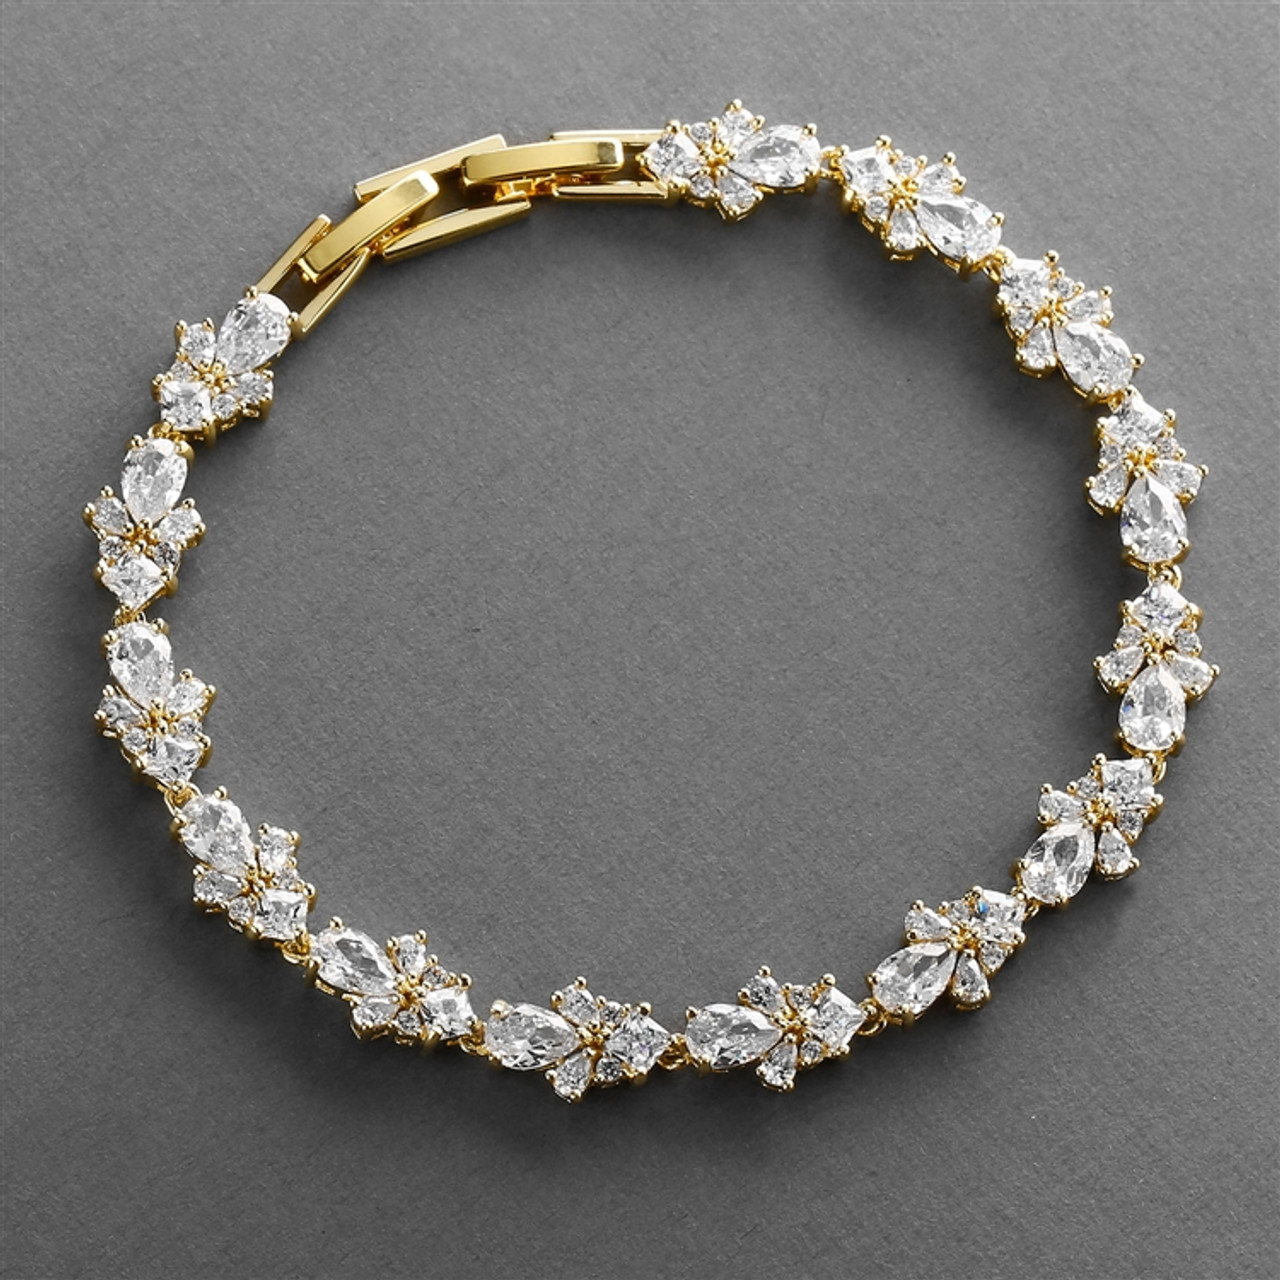 Mariell Bridals Top Selling Gold CZ Wedding Bridal & Prom Tennis Bracelet  7